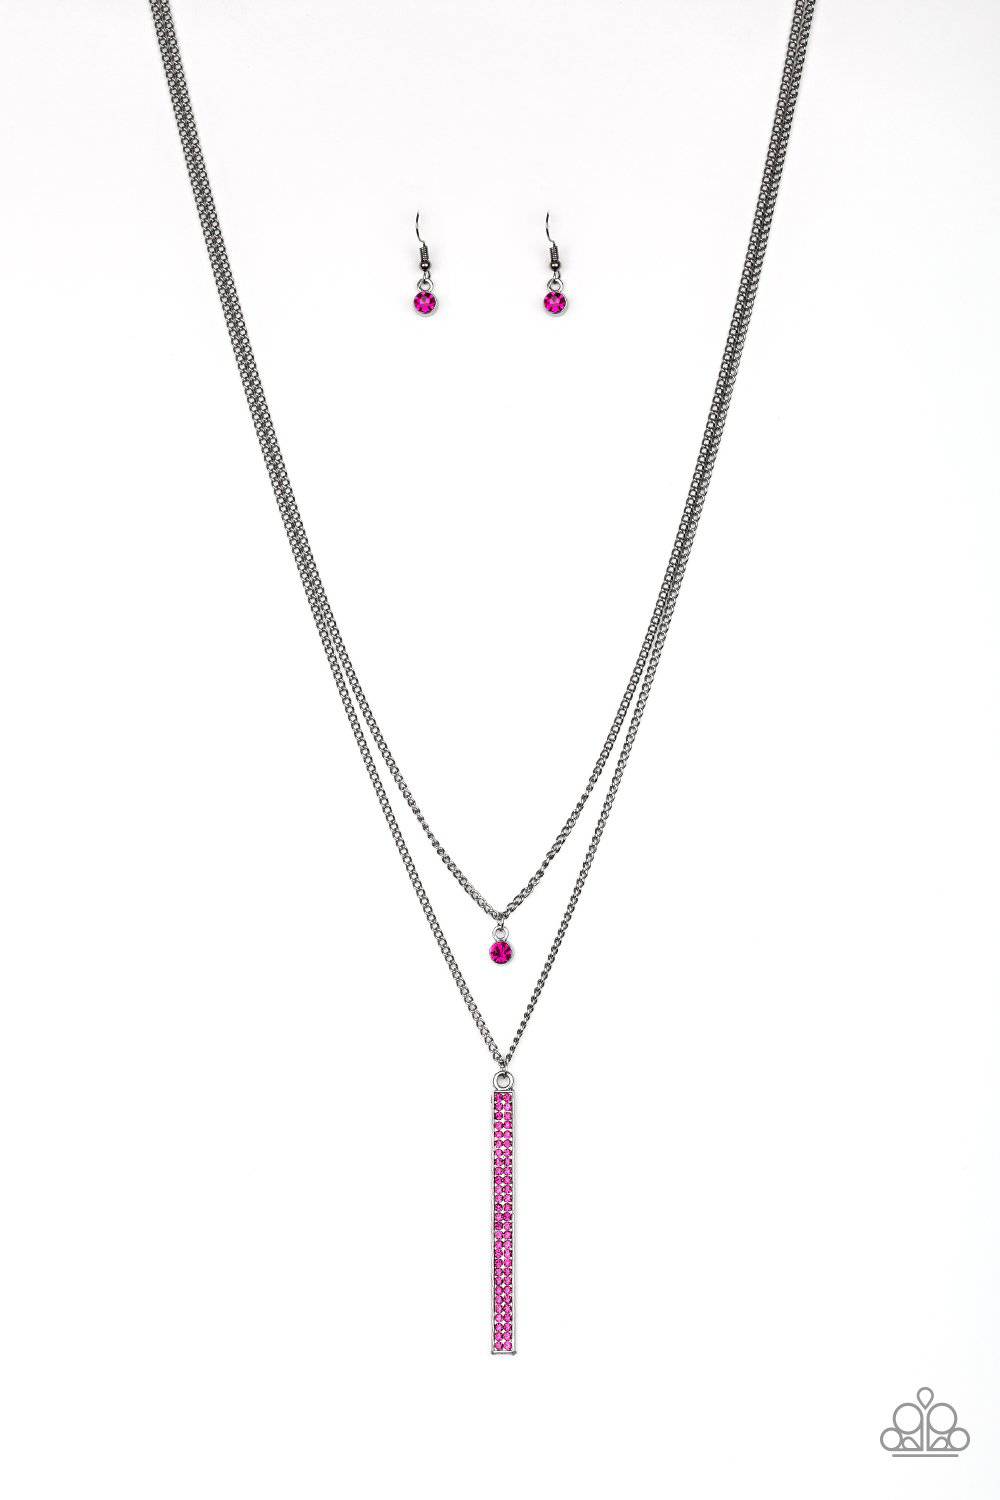 Stratospheric - Pink Rhinestone Necklace - Paparazzi Accessories - GlaMarous Titi Jewels